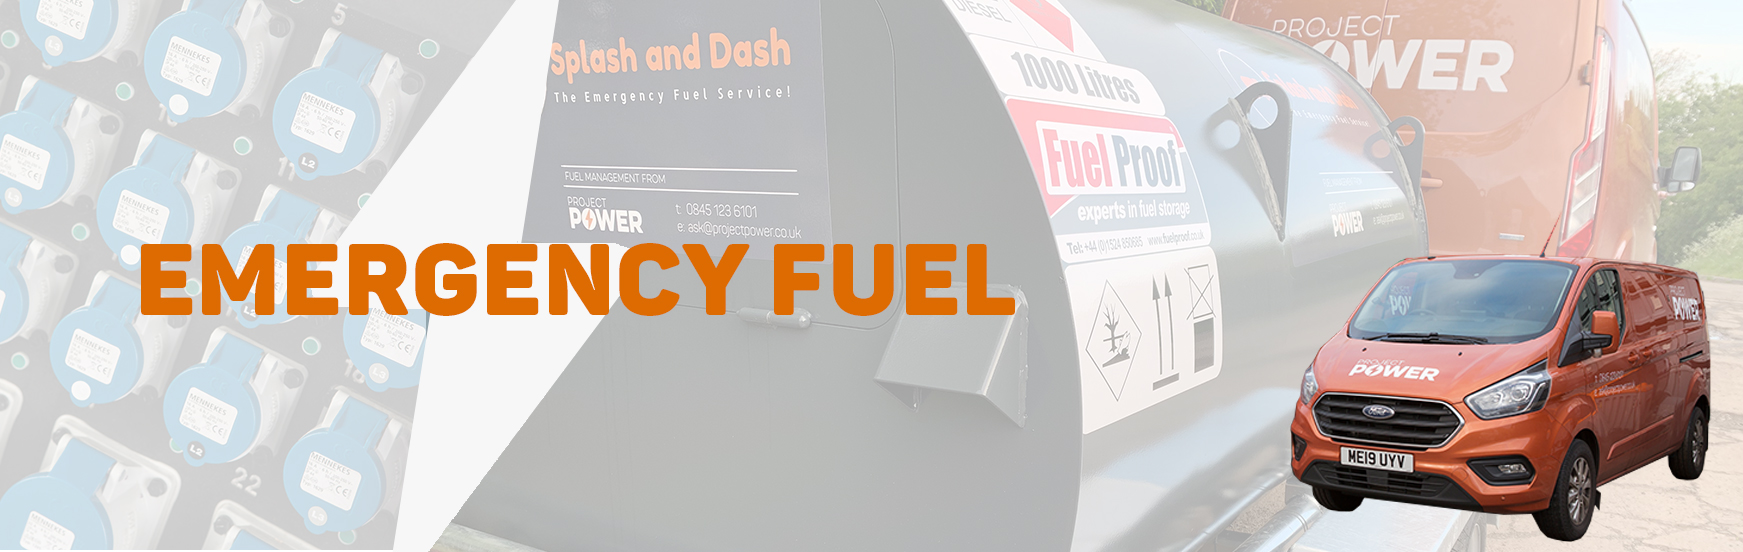 project power emergency fuel